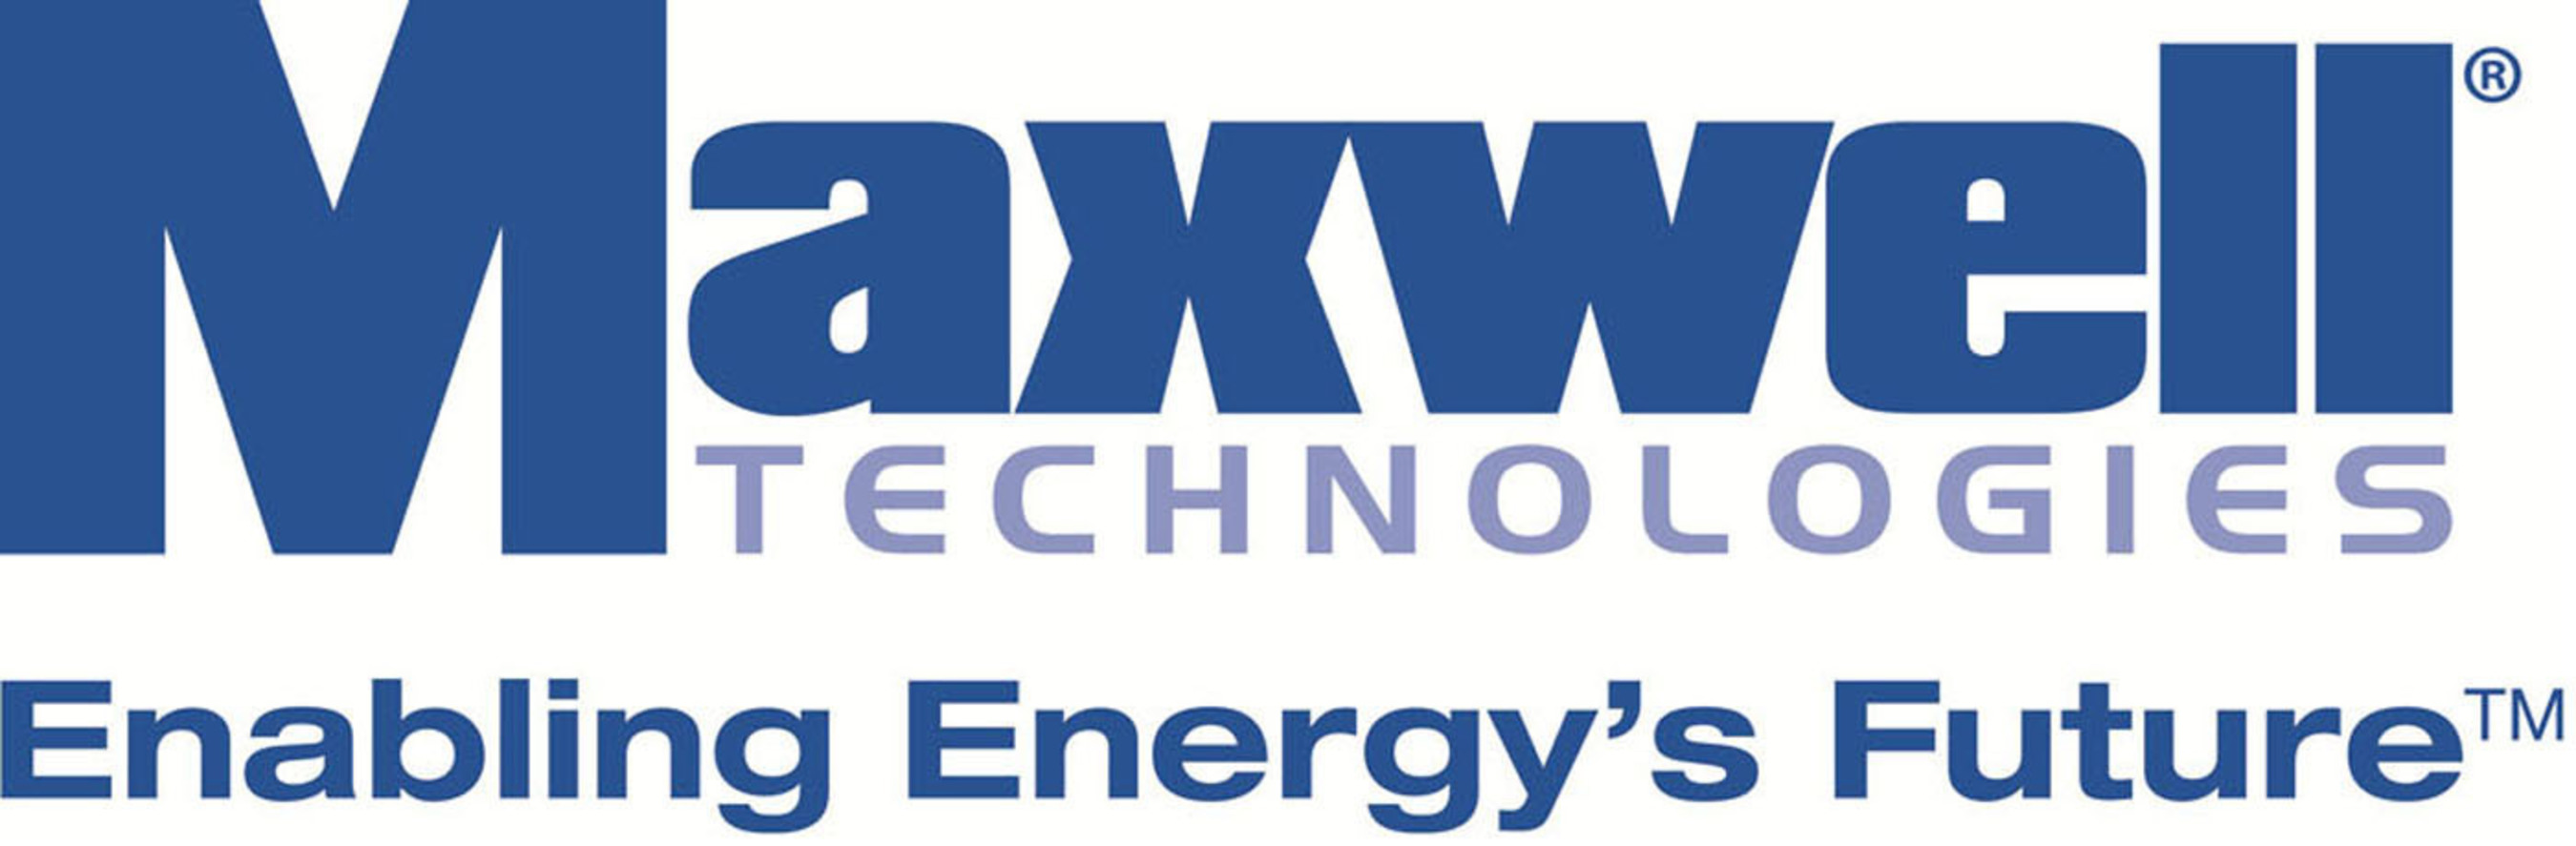 Enabling Energy's Future. (PRNewsFoto/Maxwell Technologies, Inc.)